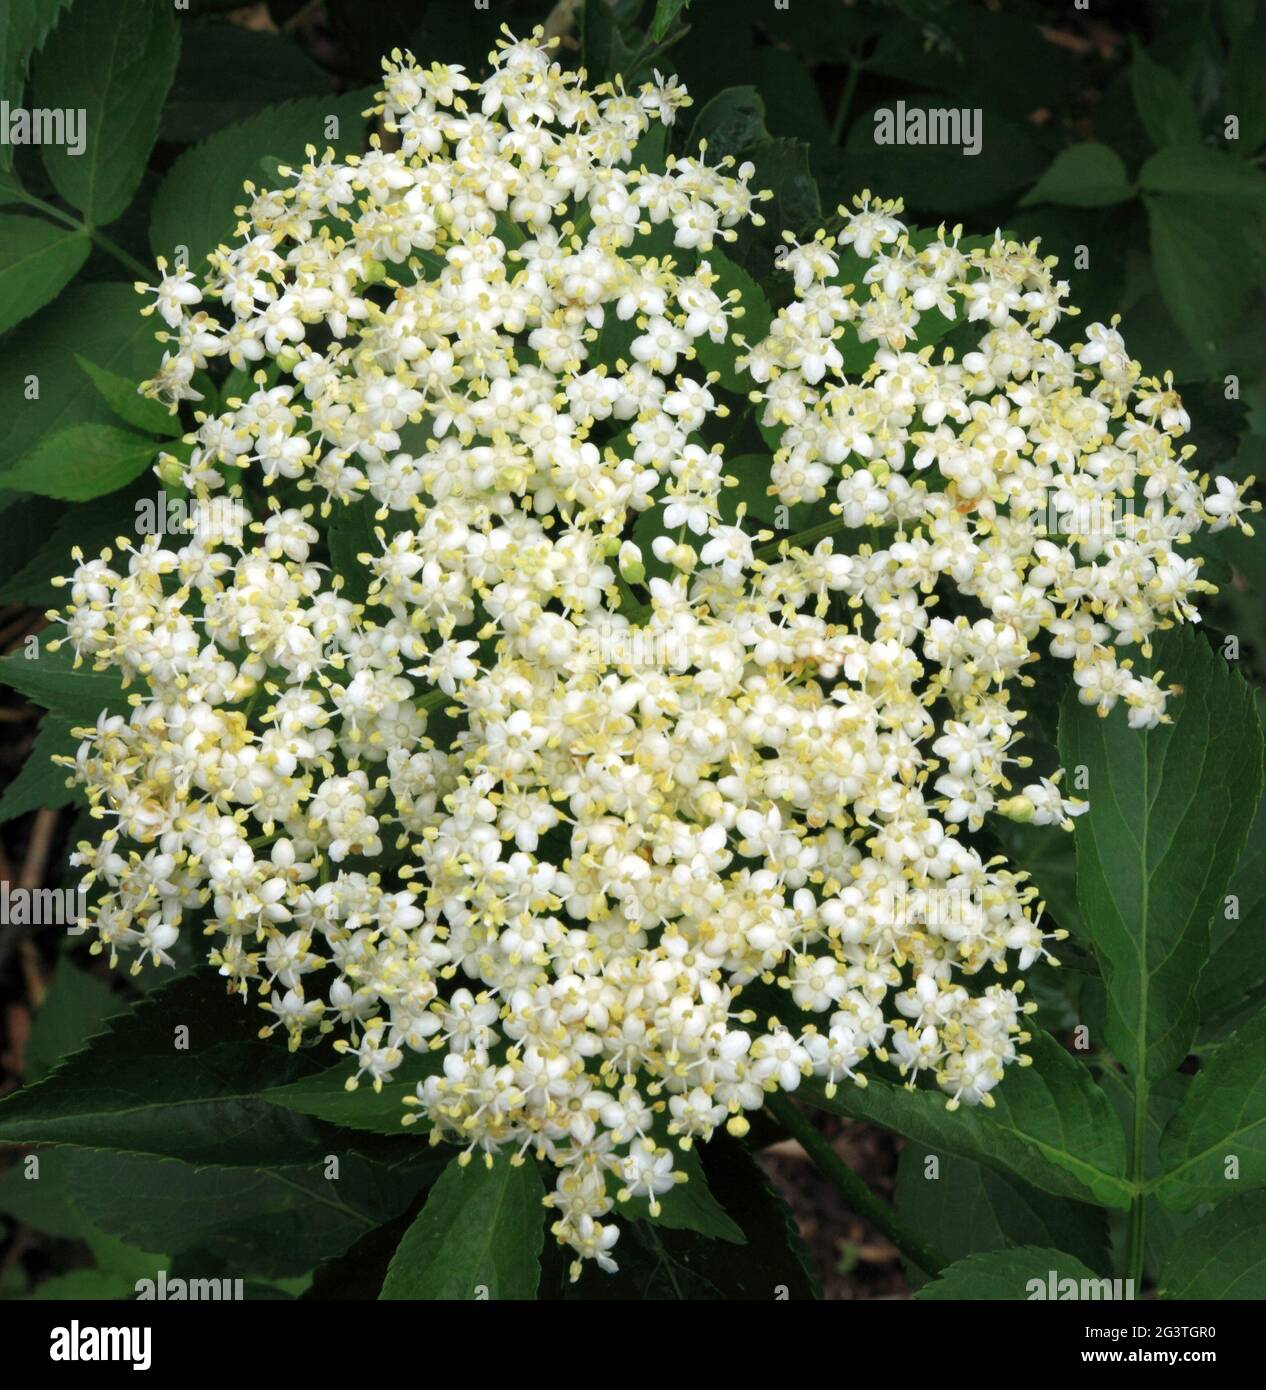 Sambucus nigra, Elderflower, fiore bianco, fogliame, piante da giardino, siepe, cespuglio, albero Foto Stock